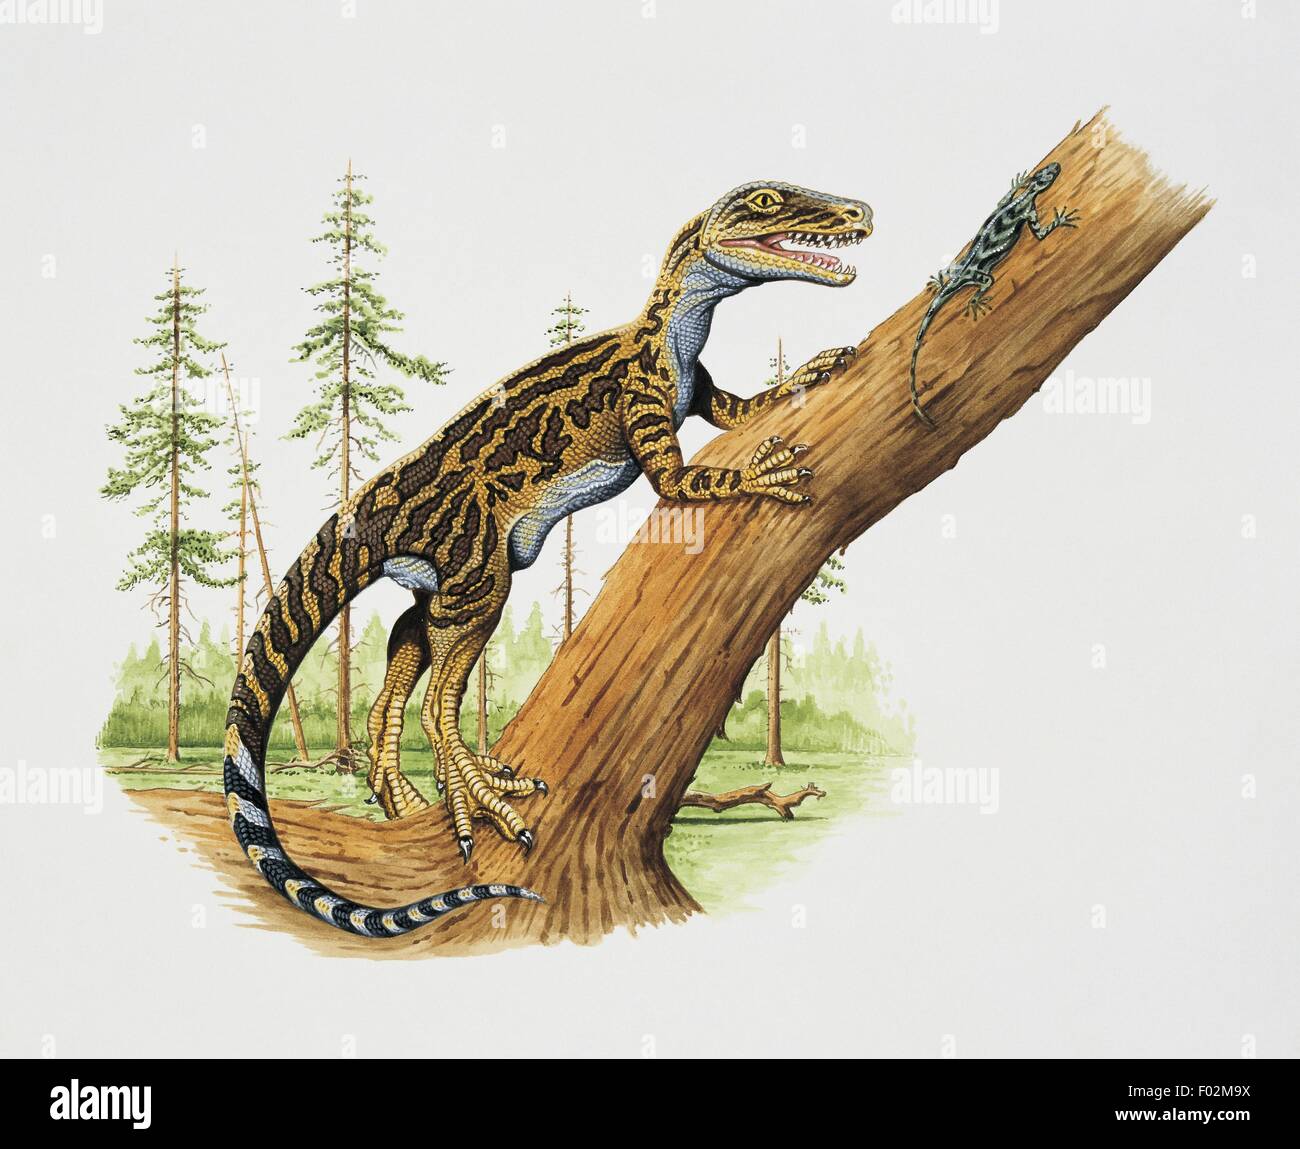 Palaeozoology - Triassic Period - Dinosaurs - Staurikosaurus (art work by Tony Jackson) Stock Photo